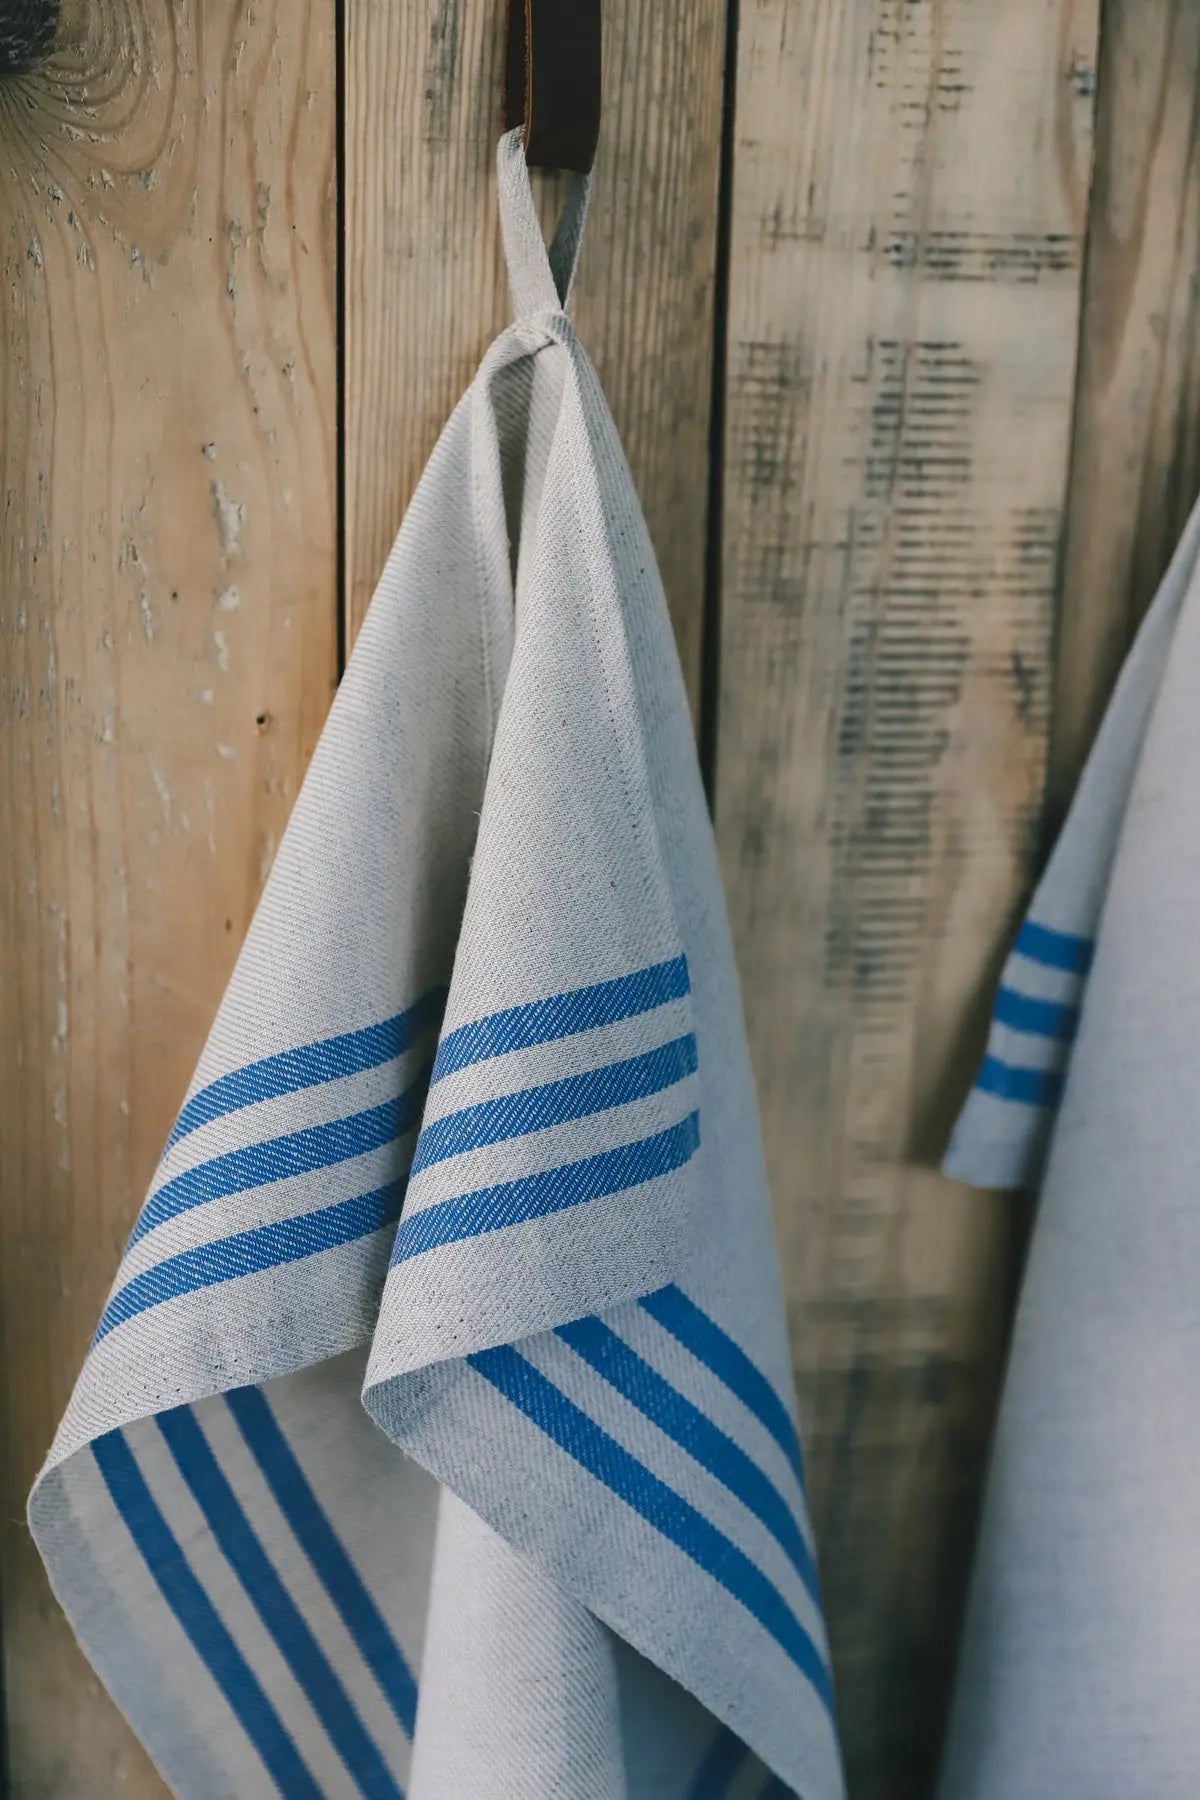 Linen Cotton Rhomb Pattern Blue Striped Kitchen Tea Towels x 2 - Epic Linen luxury linen